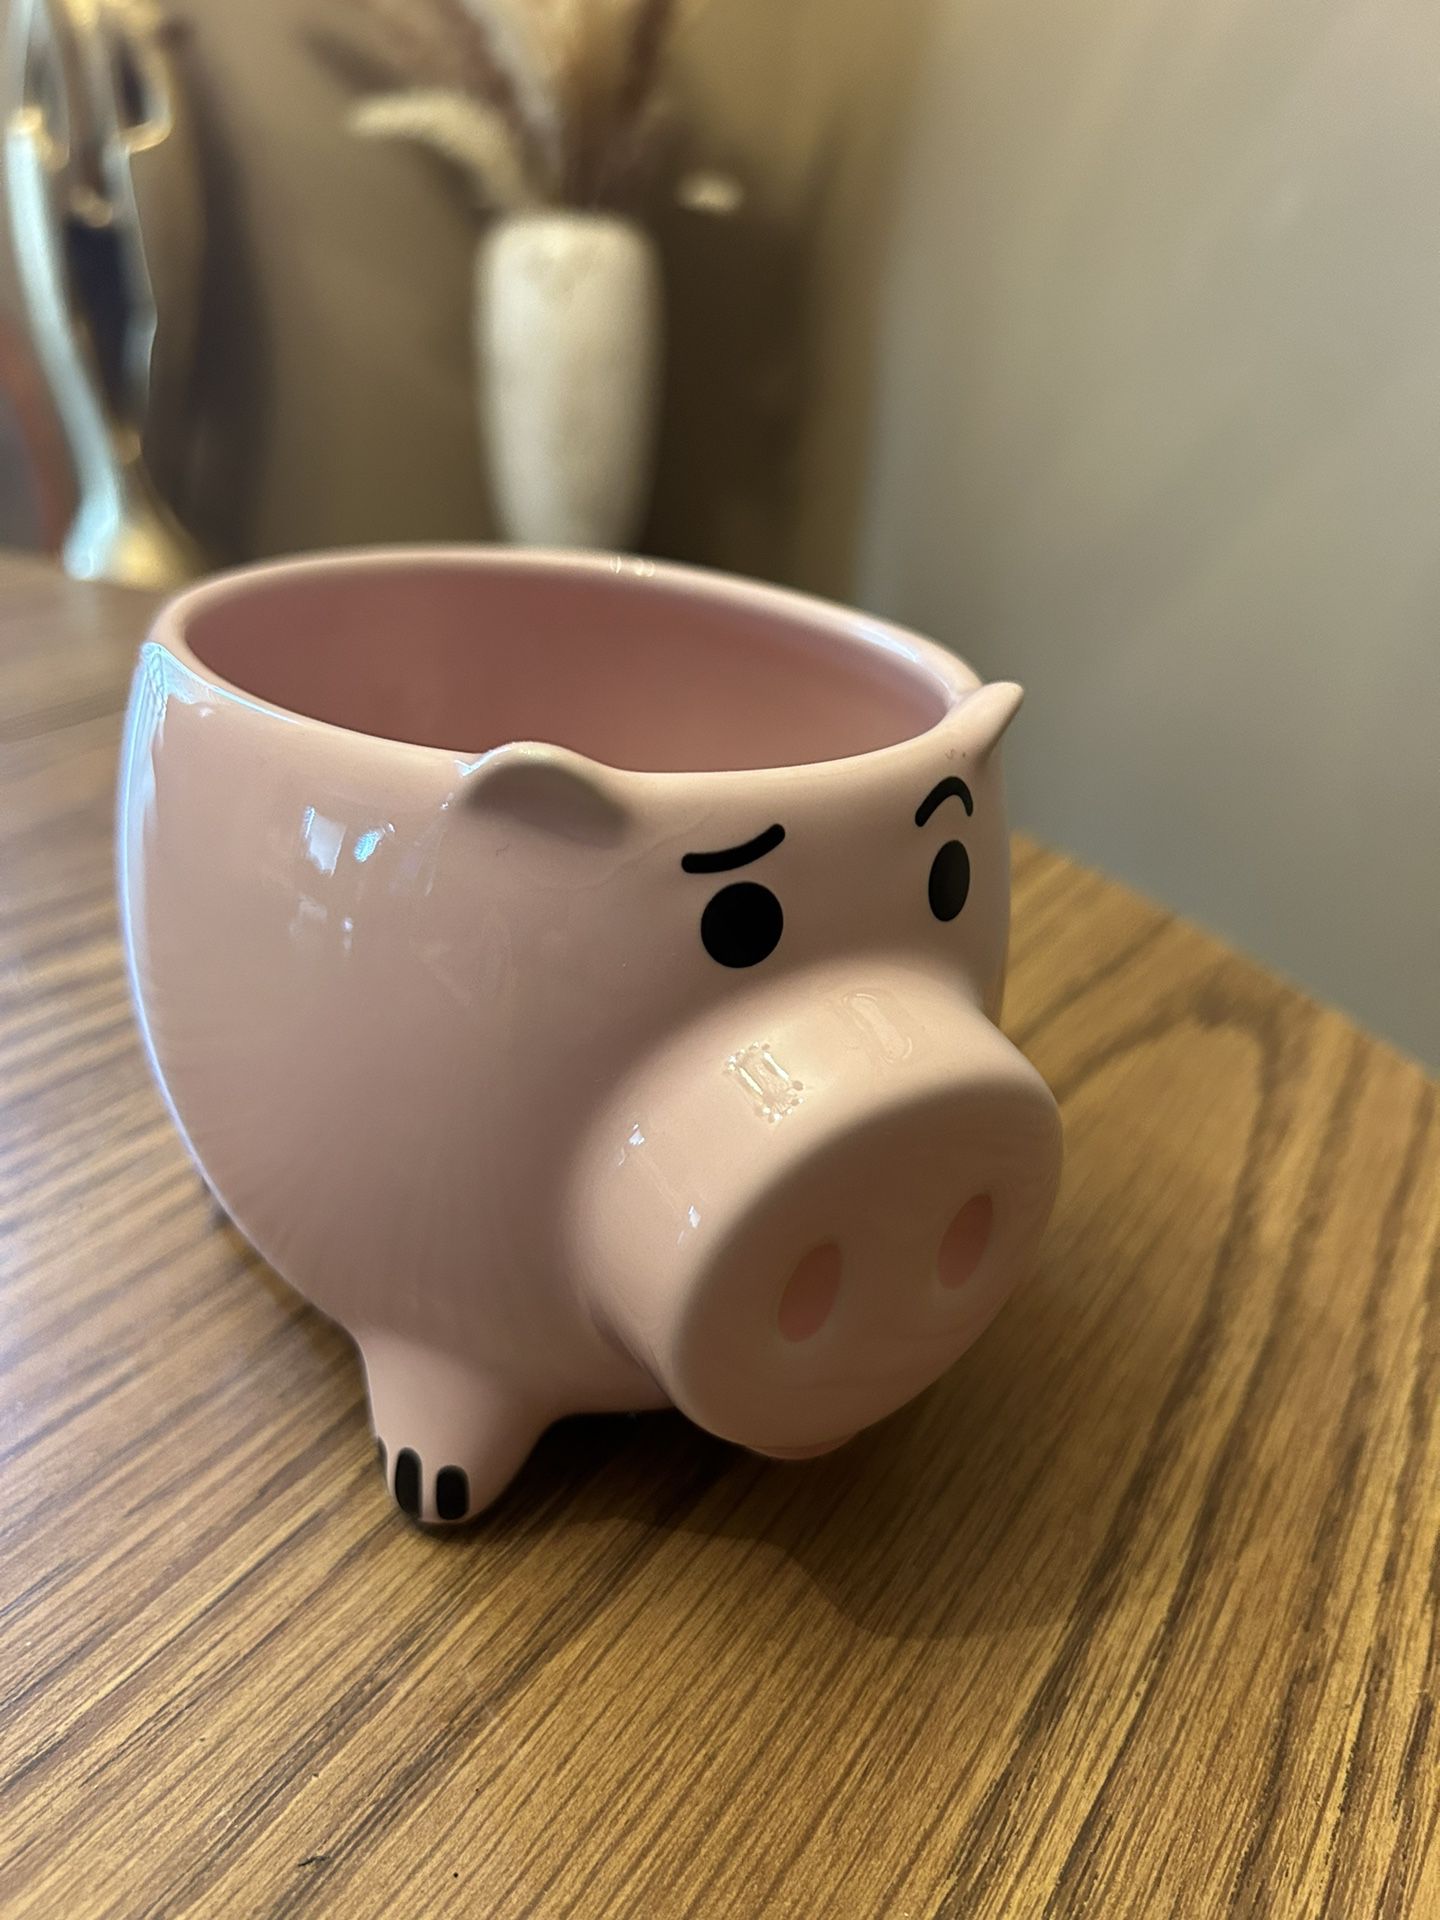 Disney coffee mug - toy story - pig ham 